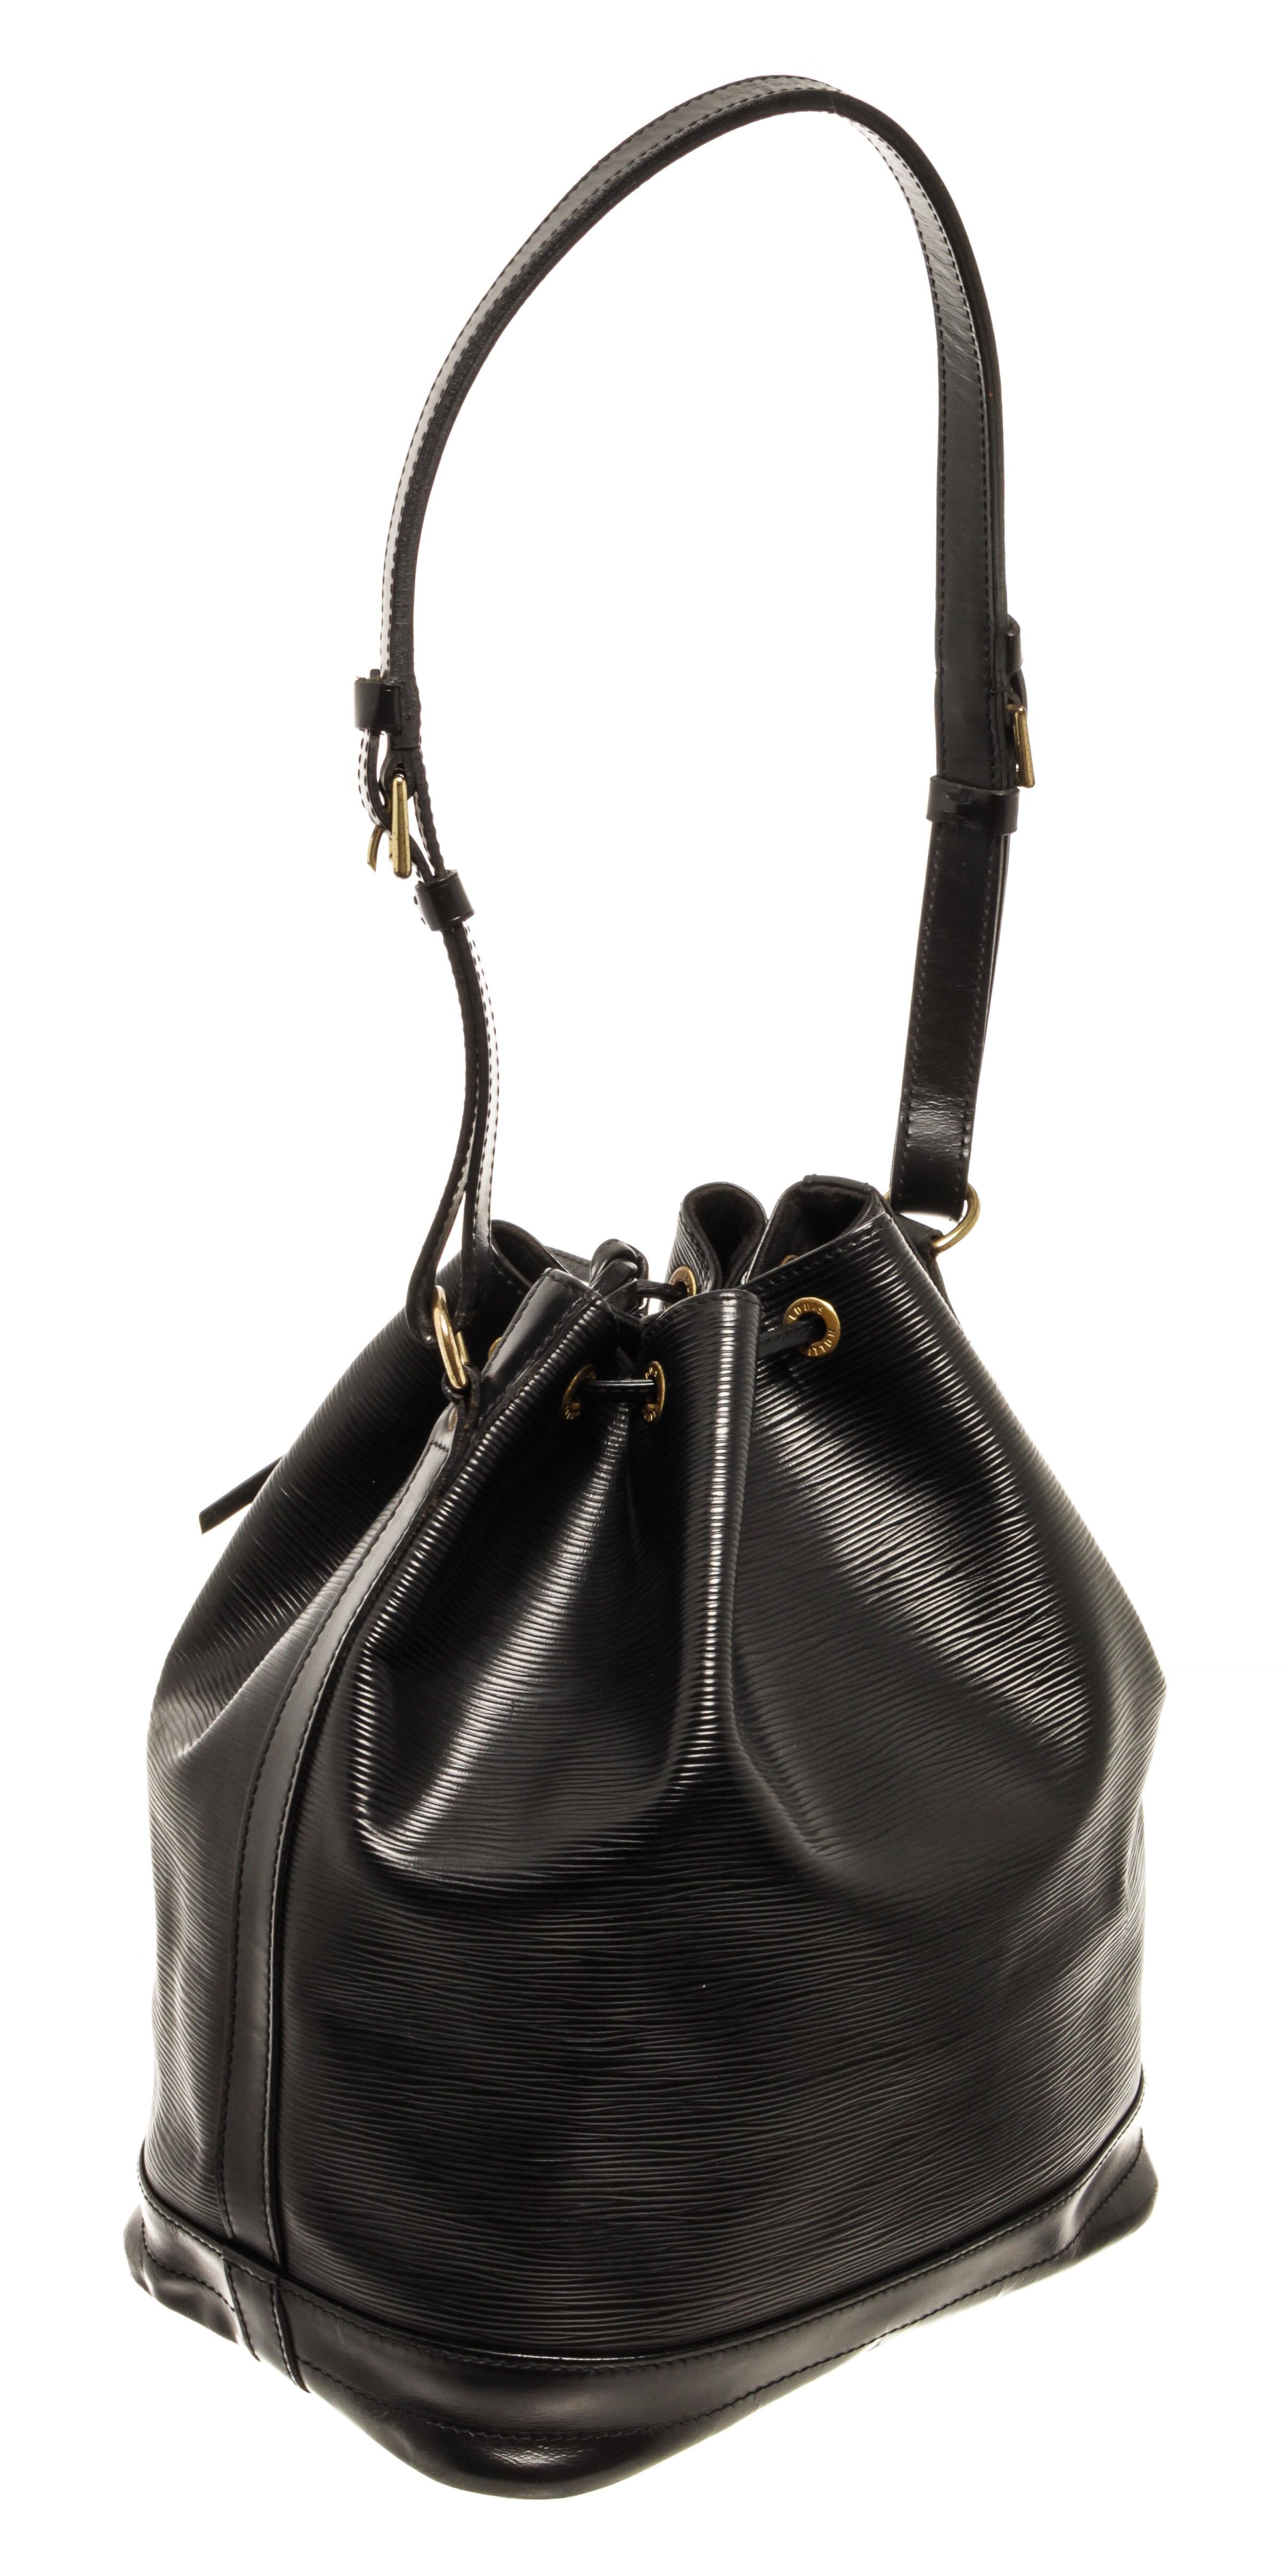 Louis Vuitton Black Epi Leather Noe with adjustable strap, suede lining, drawstring closure, gold tone hardware.

76927MSC